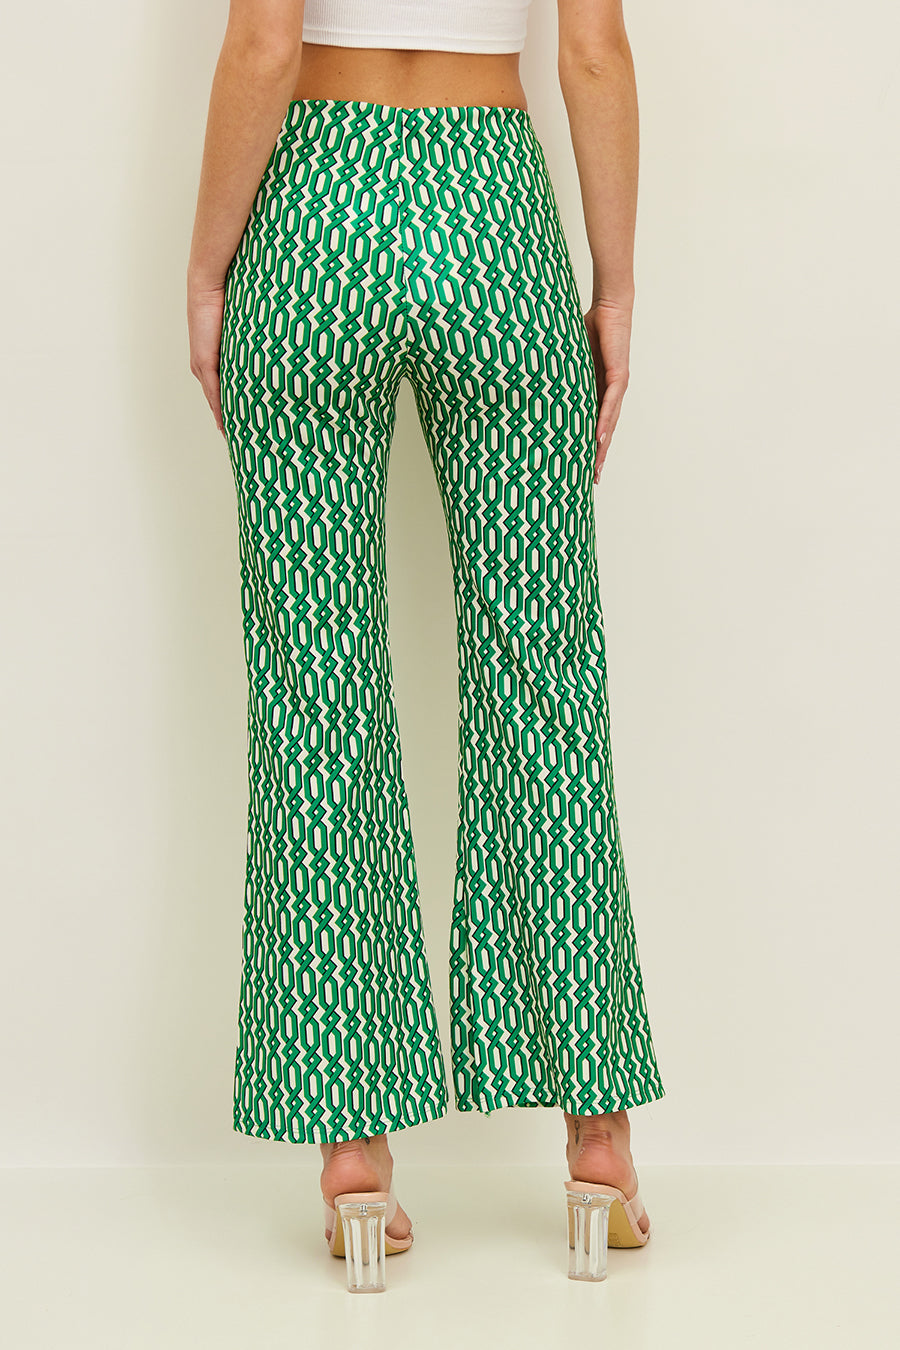 Pantaloni dama Ranya, Verde 3